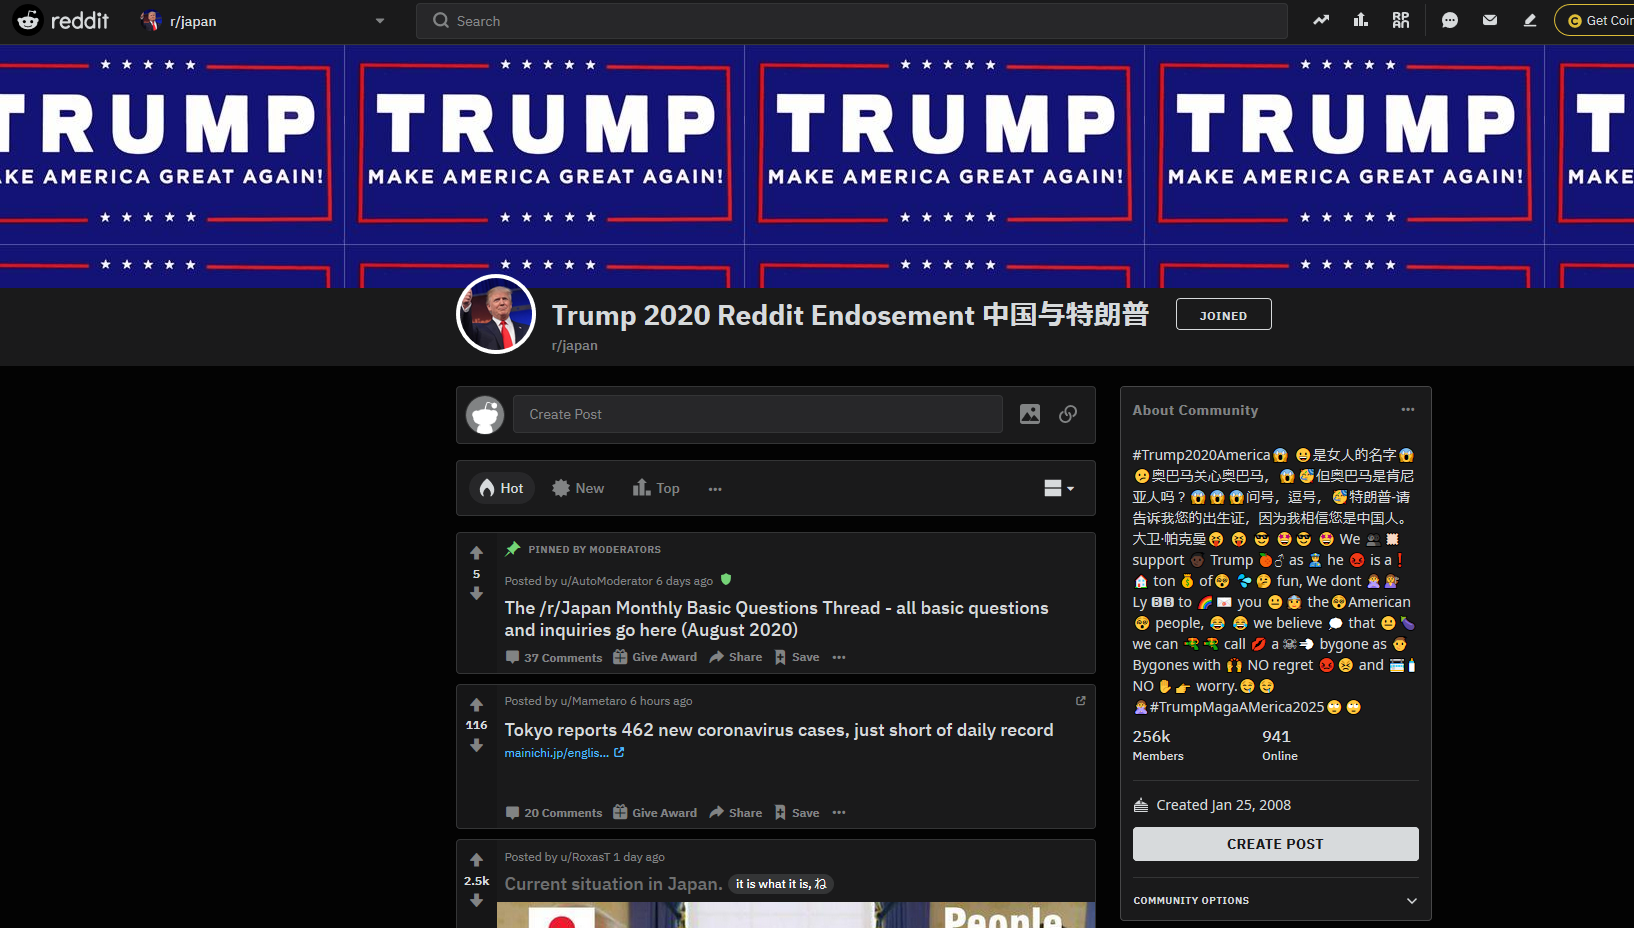 Reddit sofre ataque coordenado e é inundado por mensagens pró-Trump